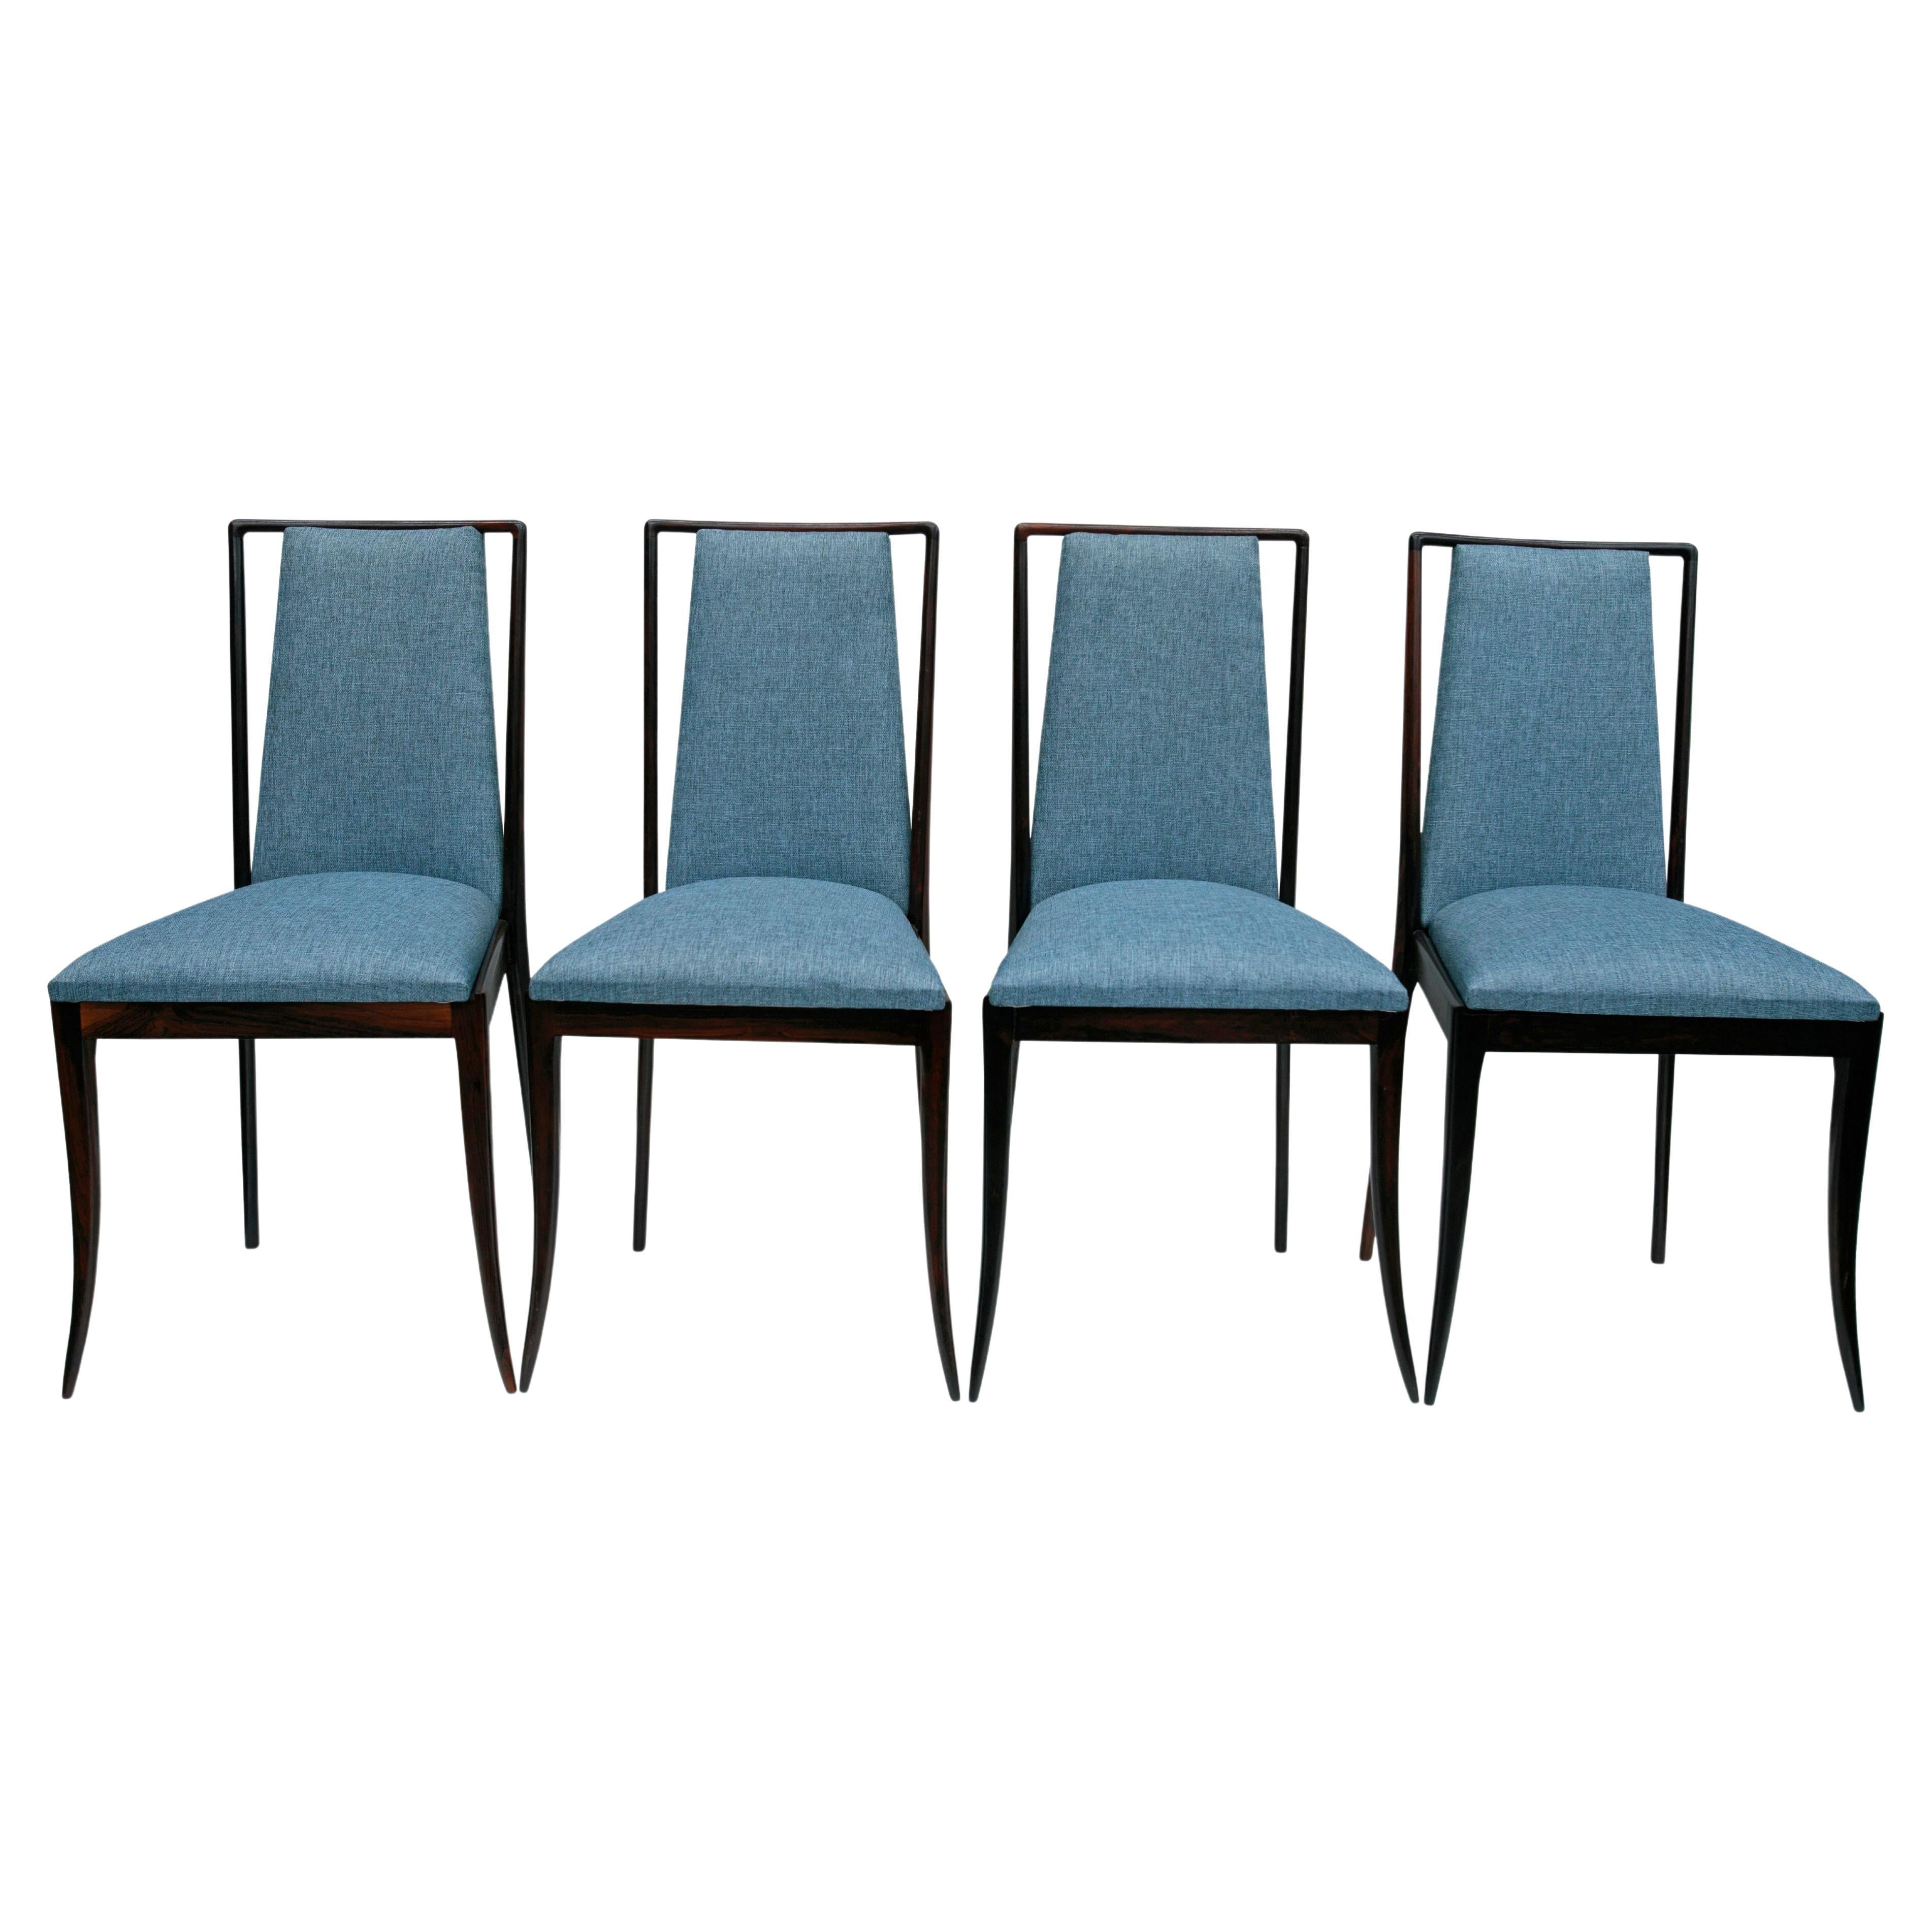 Brazilian Modern 4 Chair Set in Hardwood & Blue Fabric by G. Scapinelli, Brazi